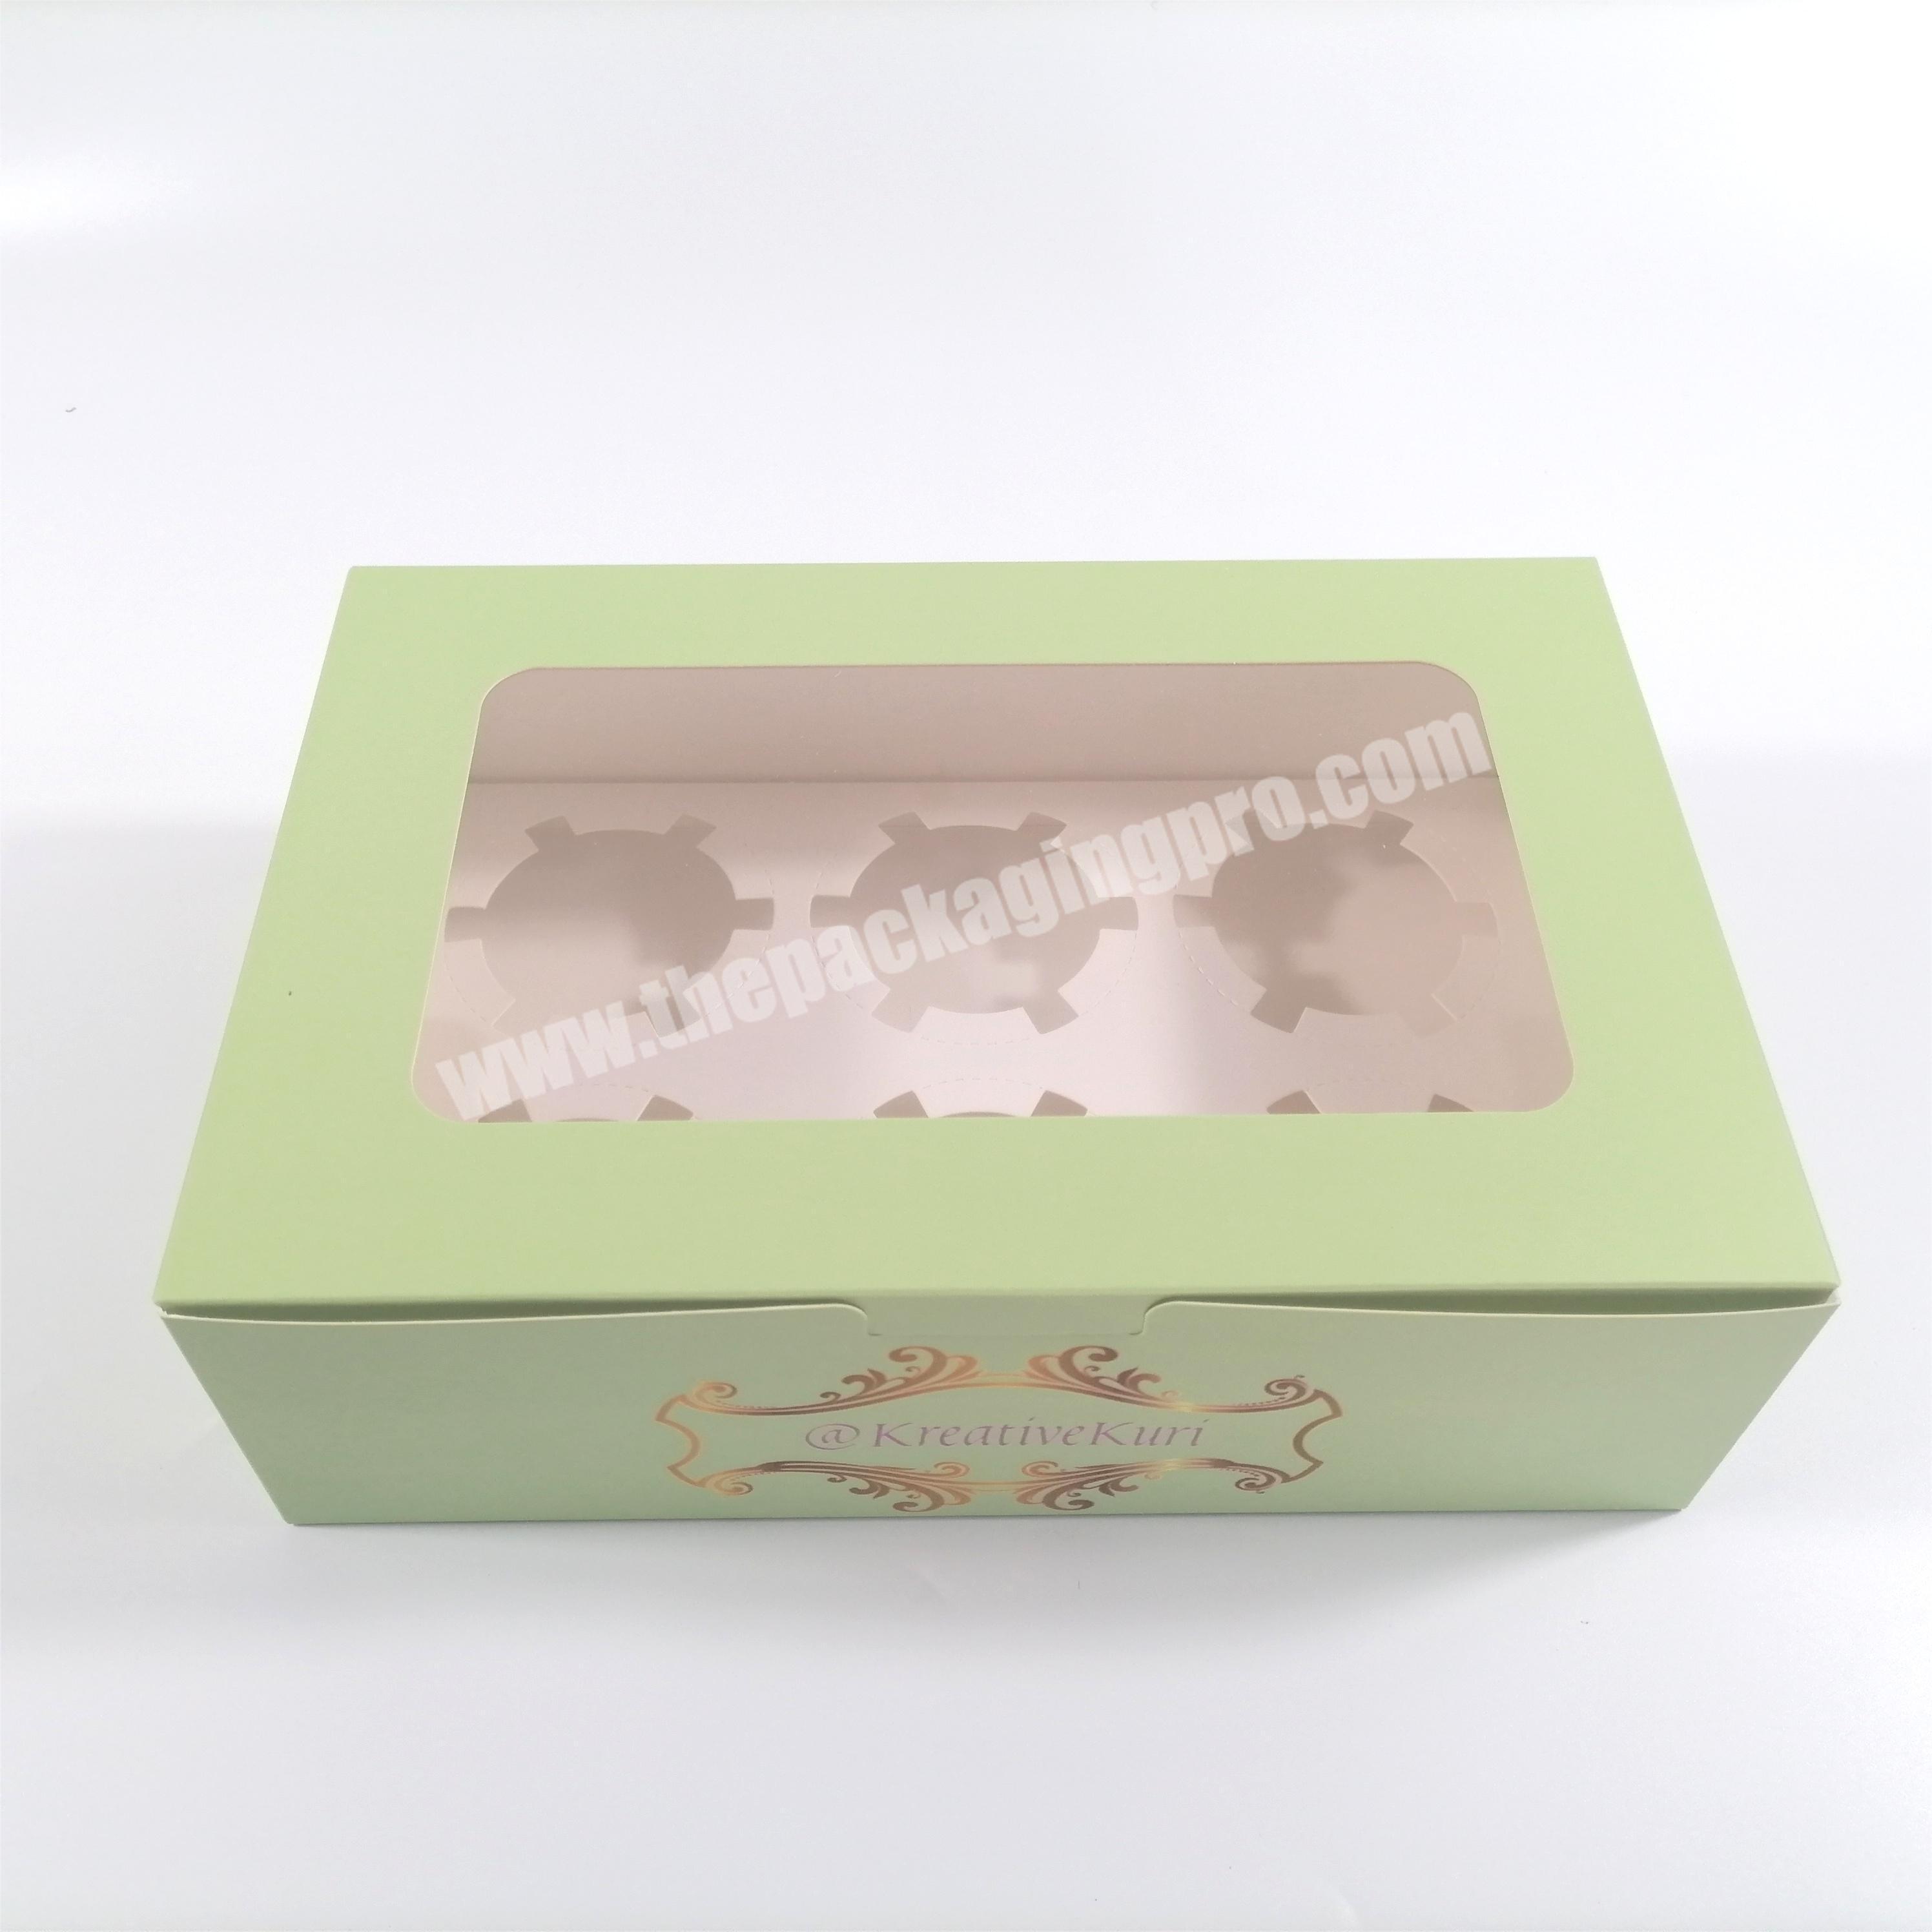 Eco Friendly Custom Design Matt Lamination 3 X 3 9x9 20x7x4 Medium White Deep Adjustable Bakery Cake Boxes With Clear Window